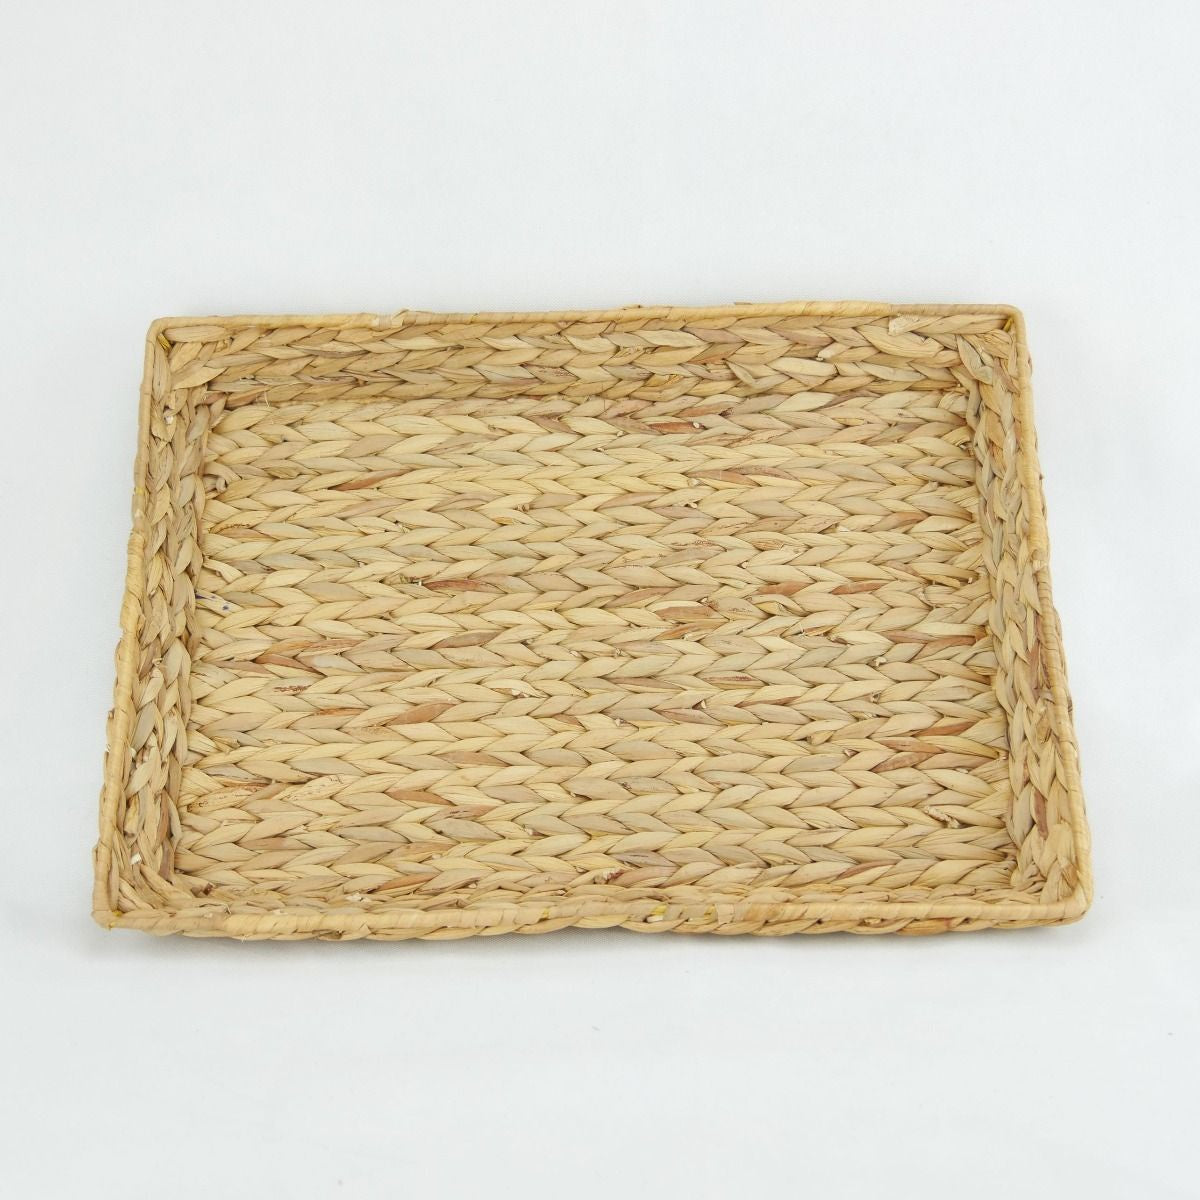 Baskets - Water Hyacinth Tray - Large